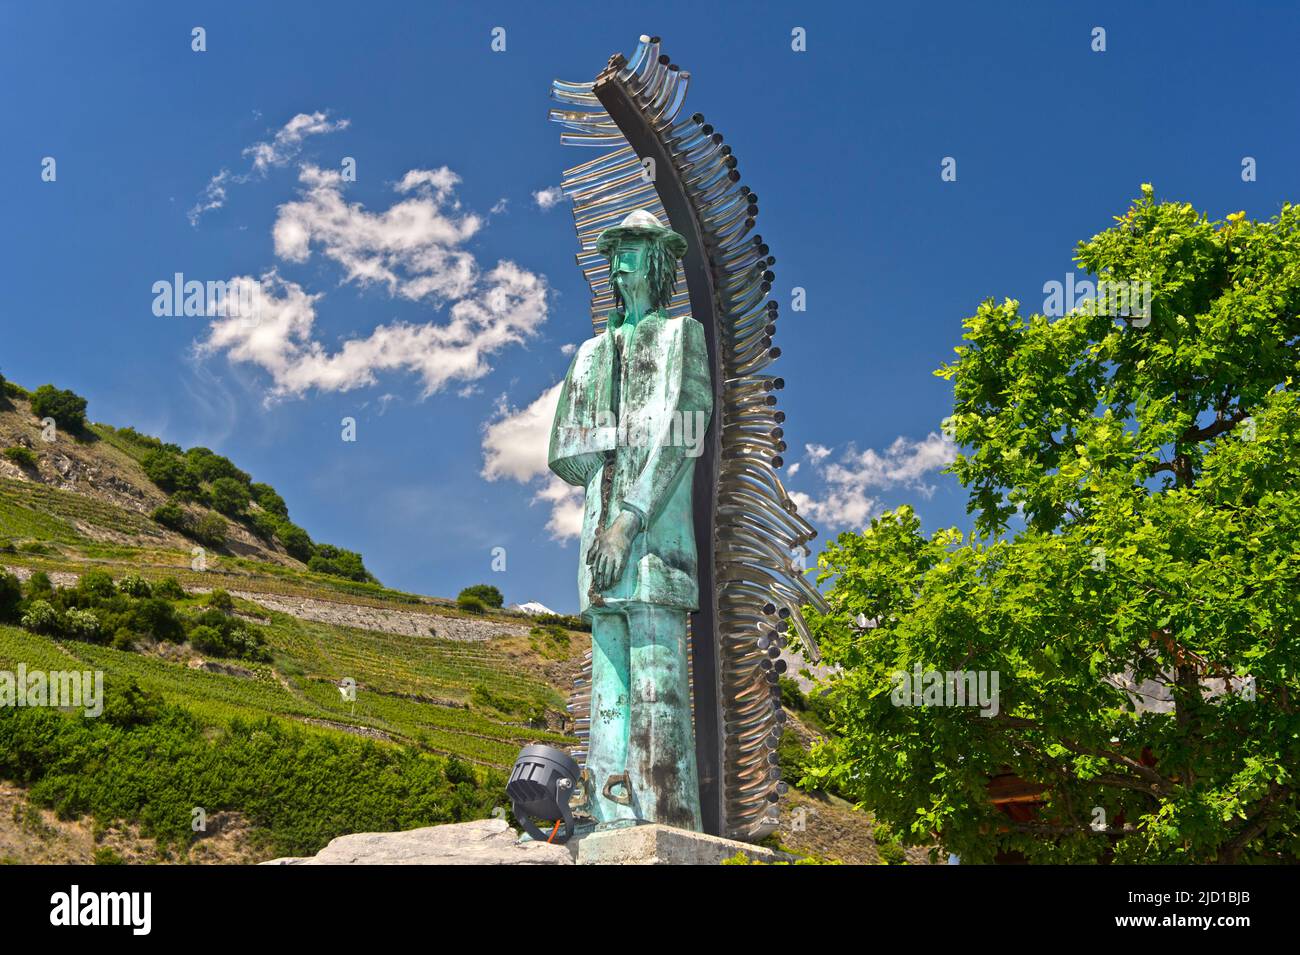 Monument to the counterfeiter and rebel Joseph-Samuel Farinet, Farinet Monument, Saillon, Valais, Switzerland Stock Photo